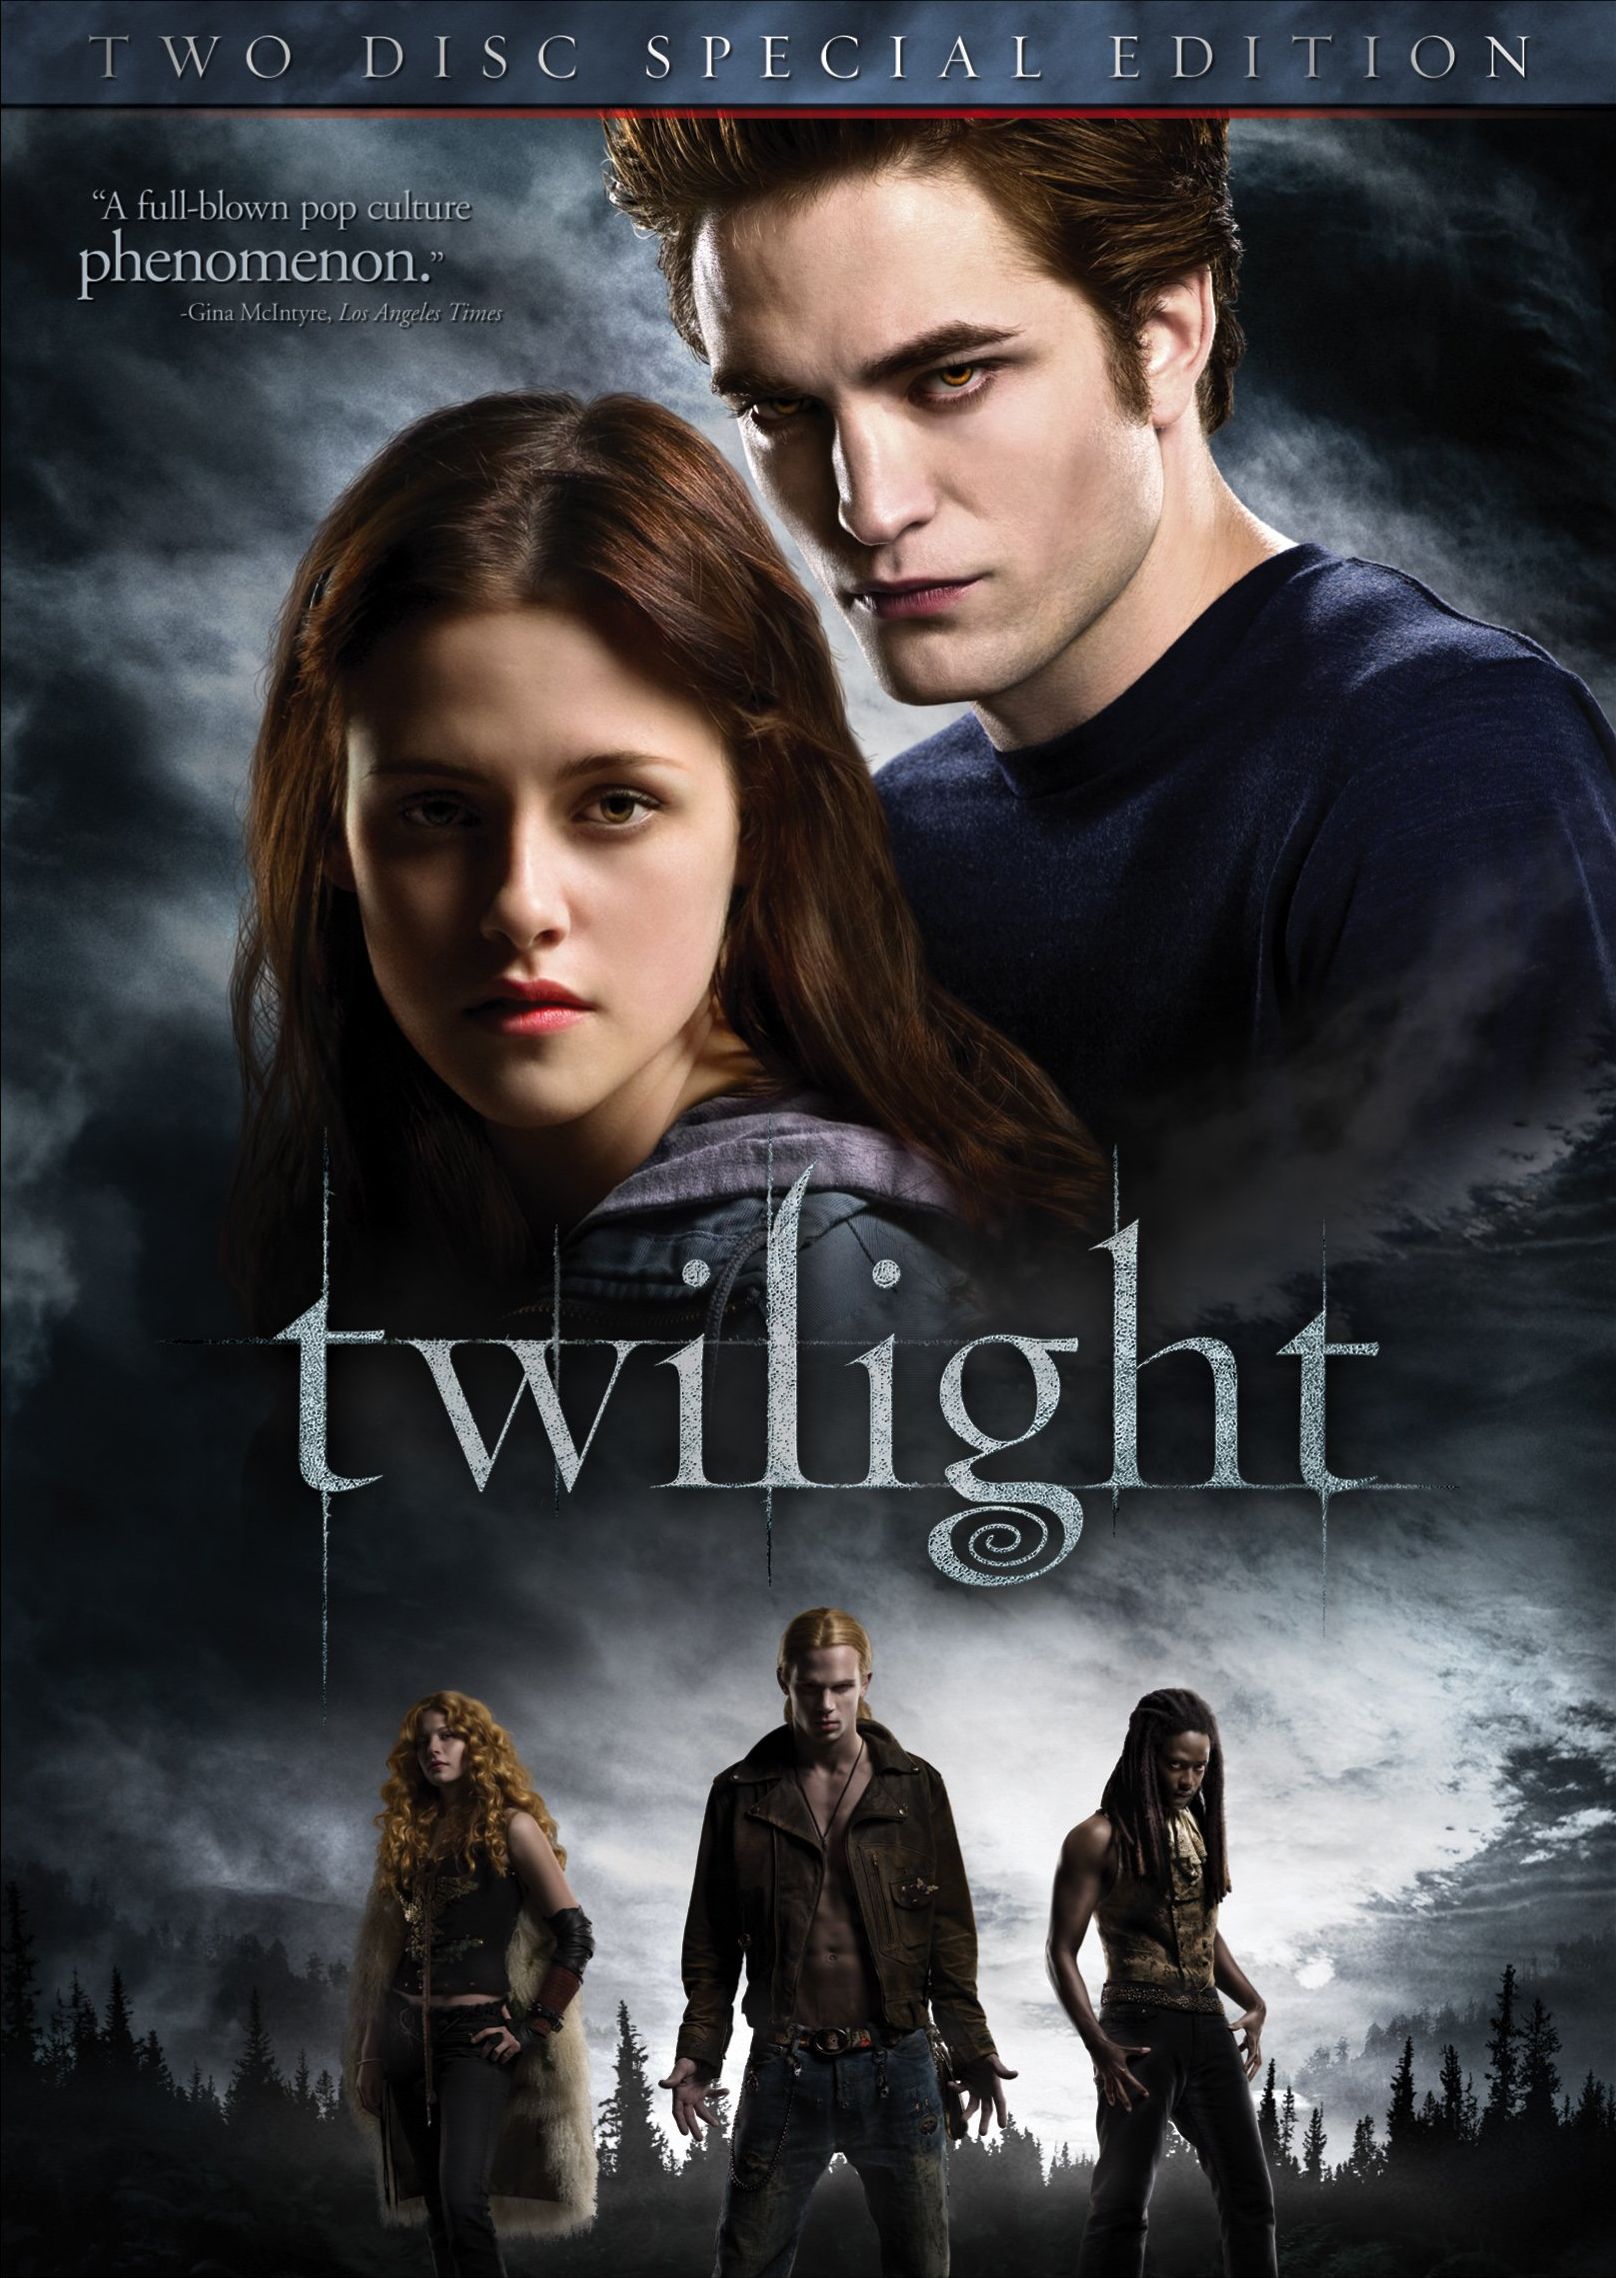 Twilight DVD Release Date March 21, 2009